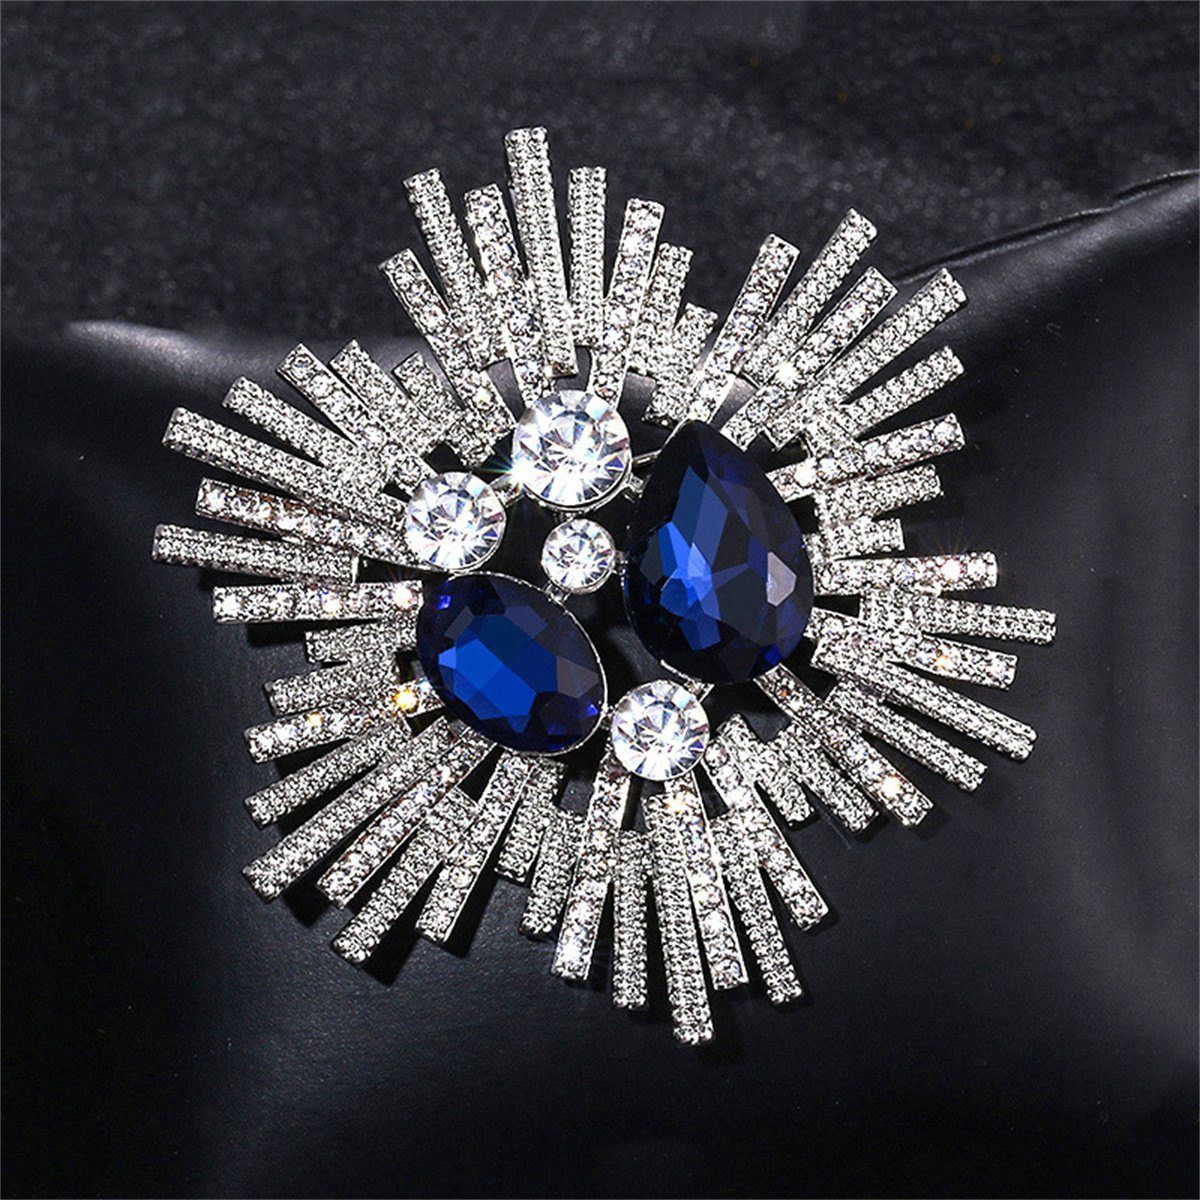 carefully selected Brosche Exquisite Vintage-Brosche in Feuerwerksform, Blau besetzt mit Zirkonia